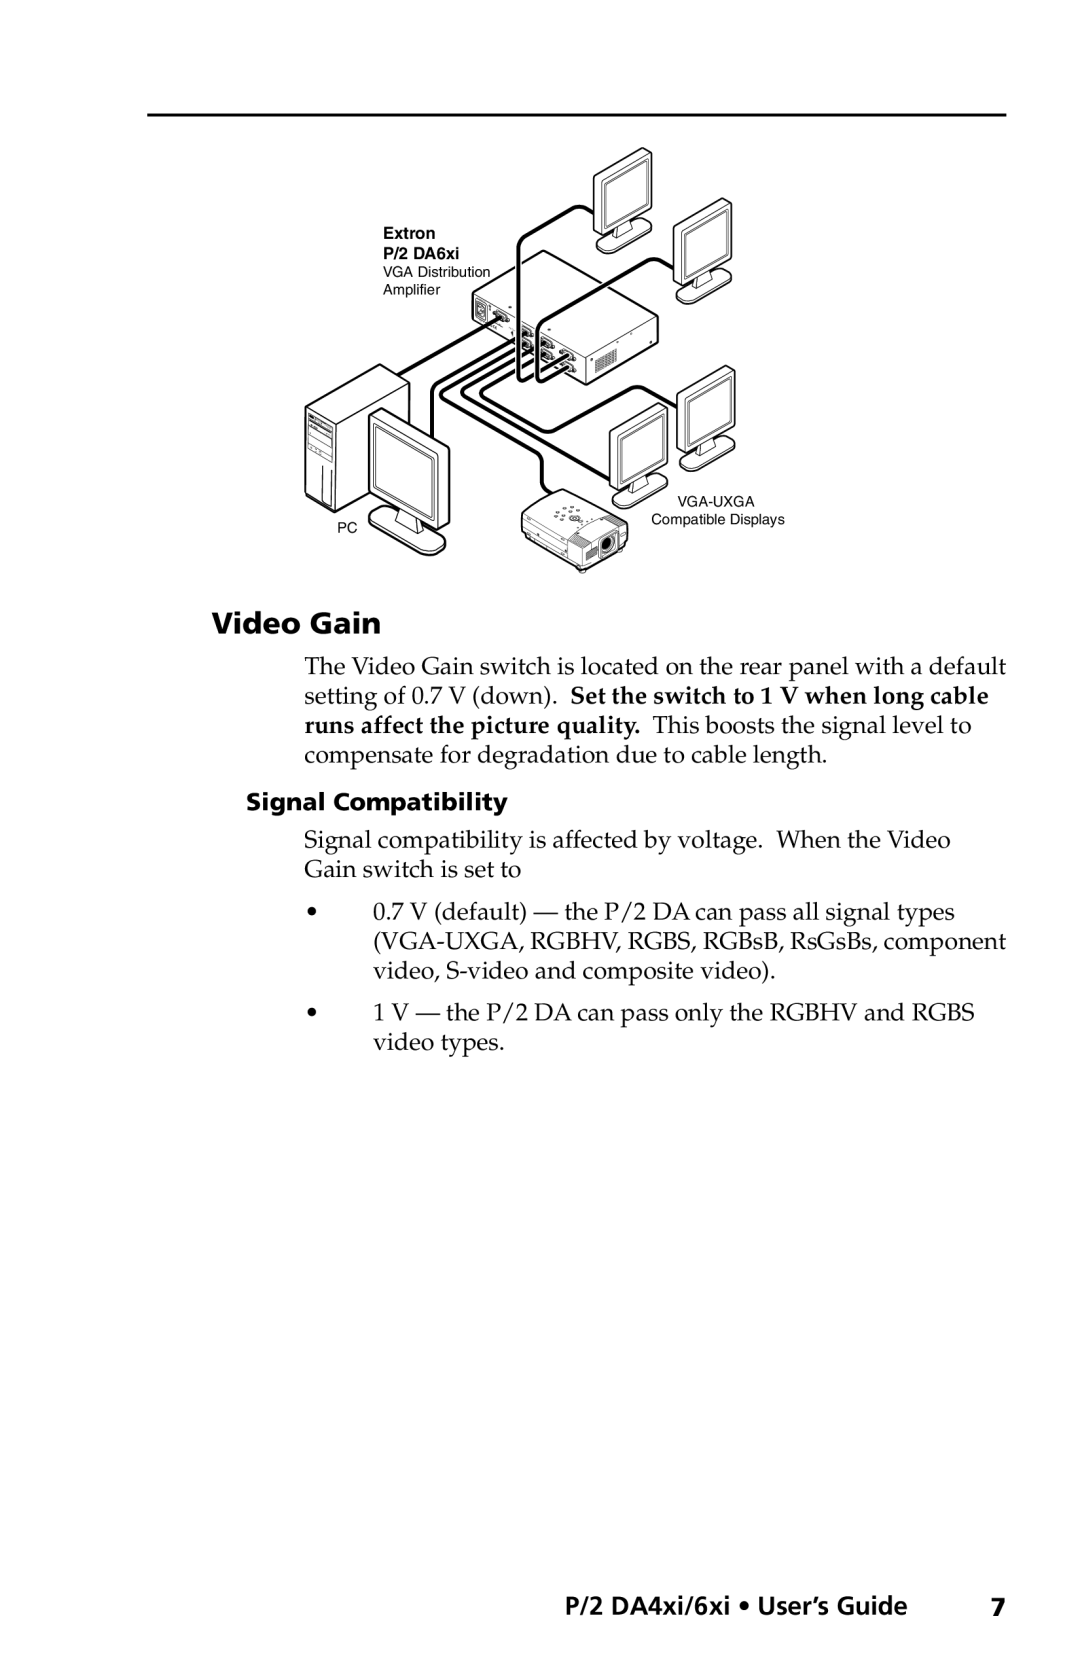 Extron electronic P/2 DA4xi s, P/2 DA6xi s manual Video Gain, P/2 DA4xi/6xi User’s Guide, Signal Compatibility 